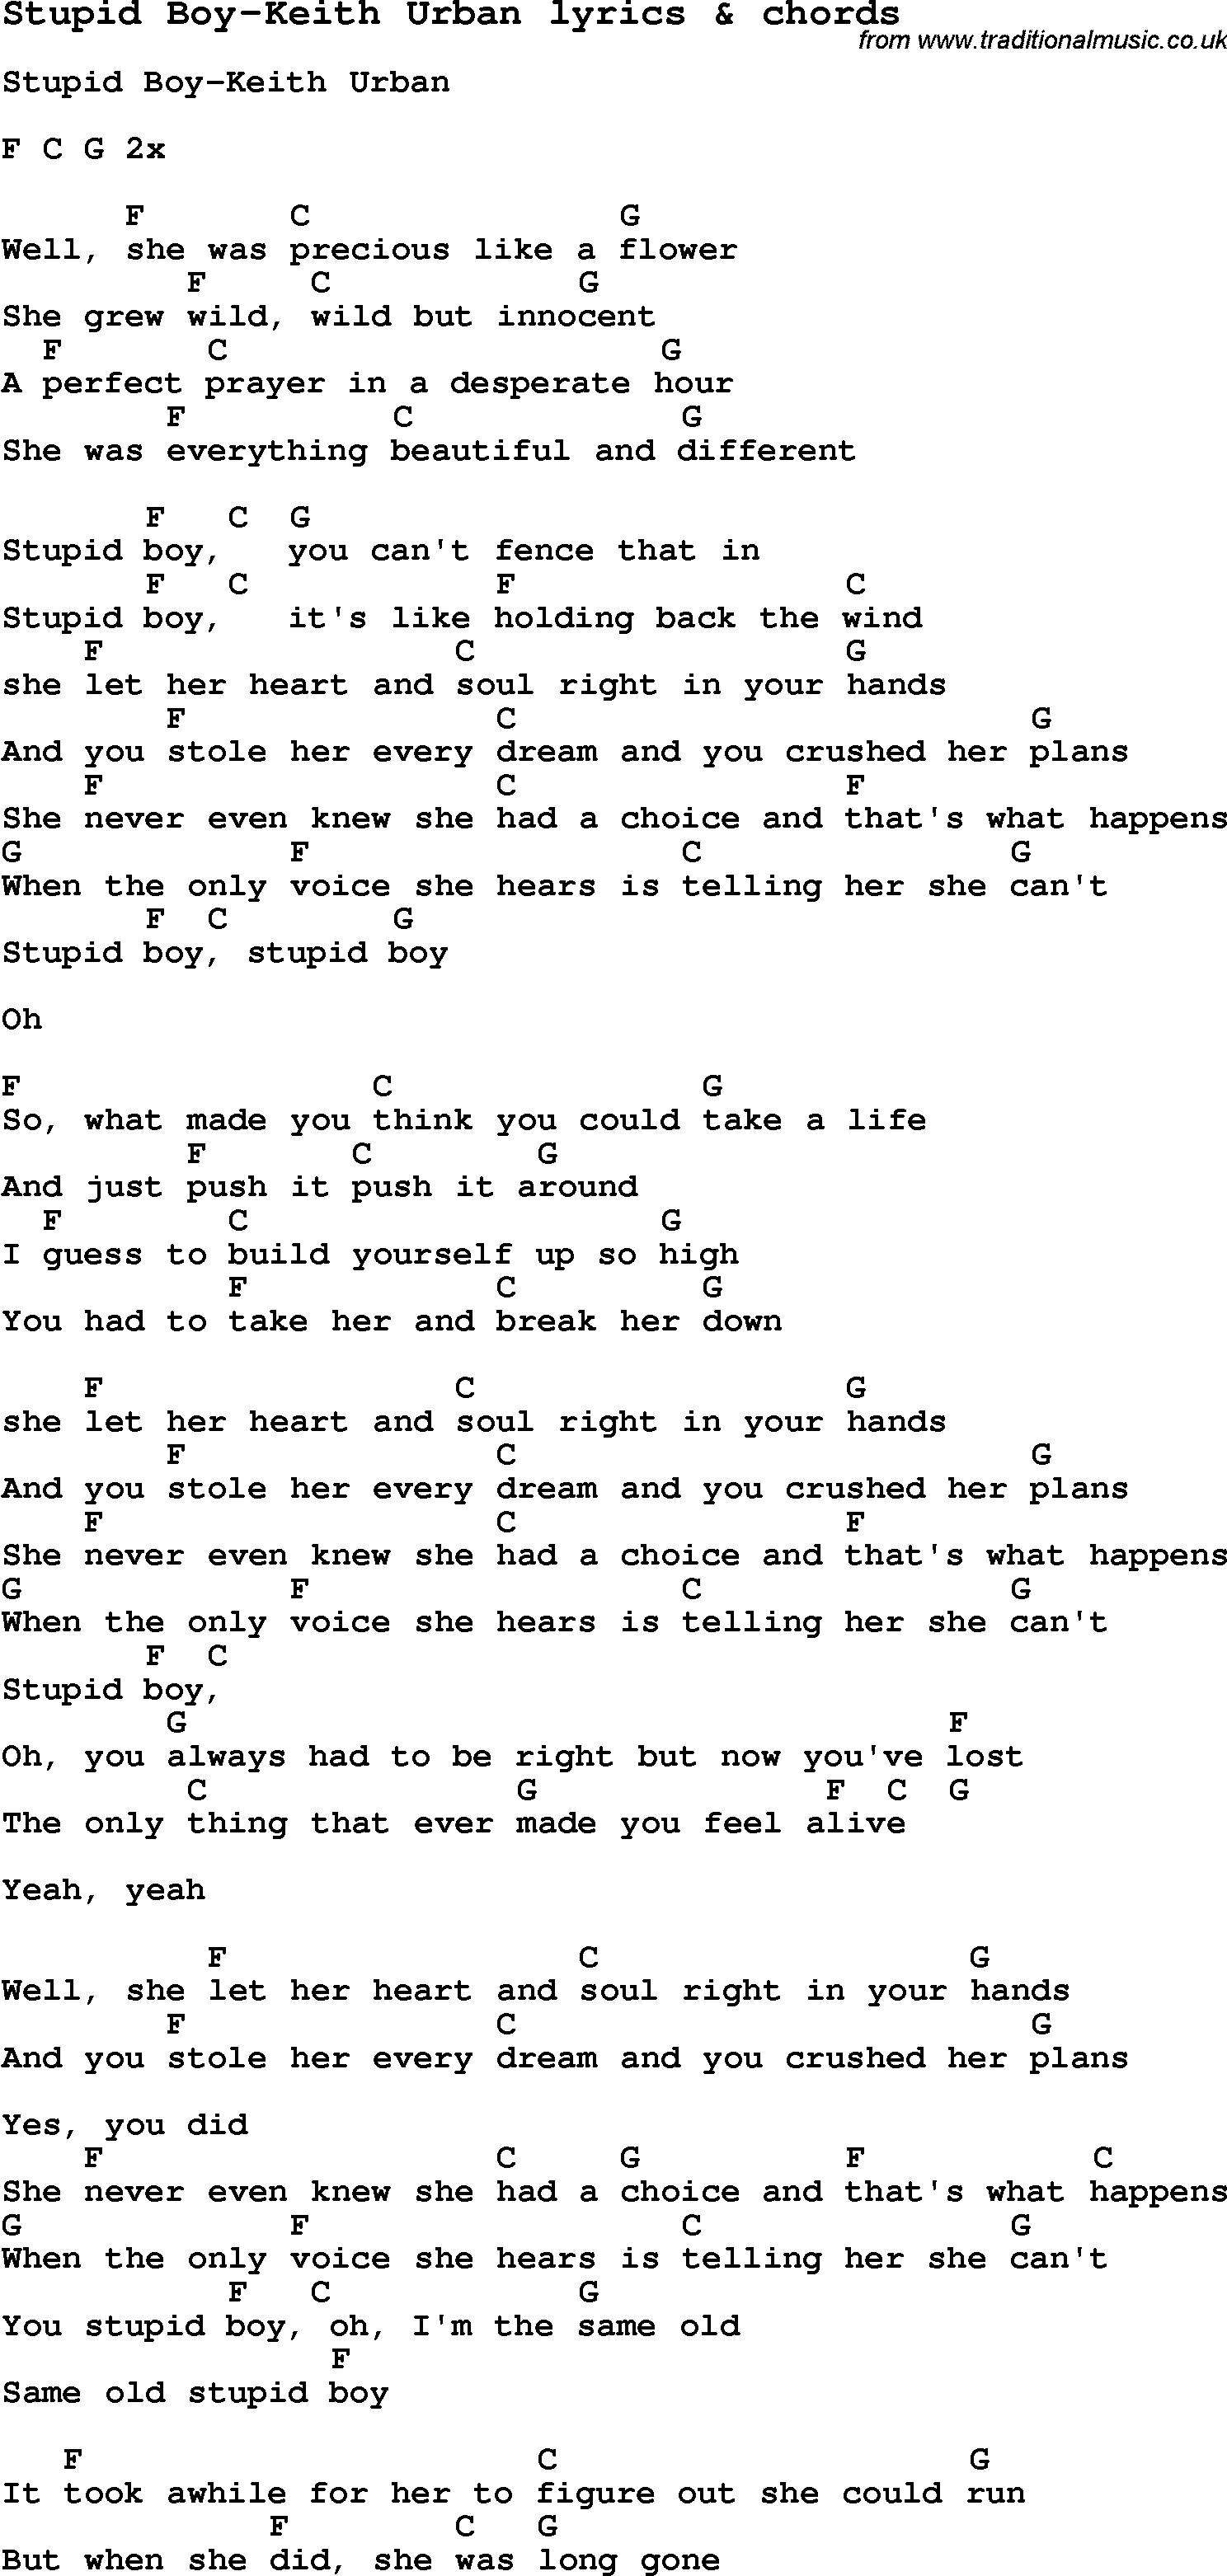 Love Song Lyrics for: Stupid Boy-Keith Urban with chords for Ukulele, Guitar Banjo etc.